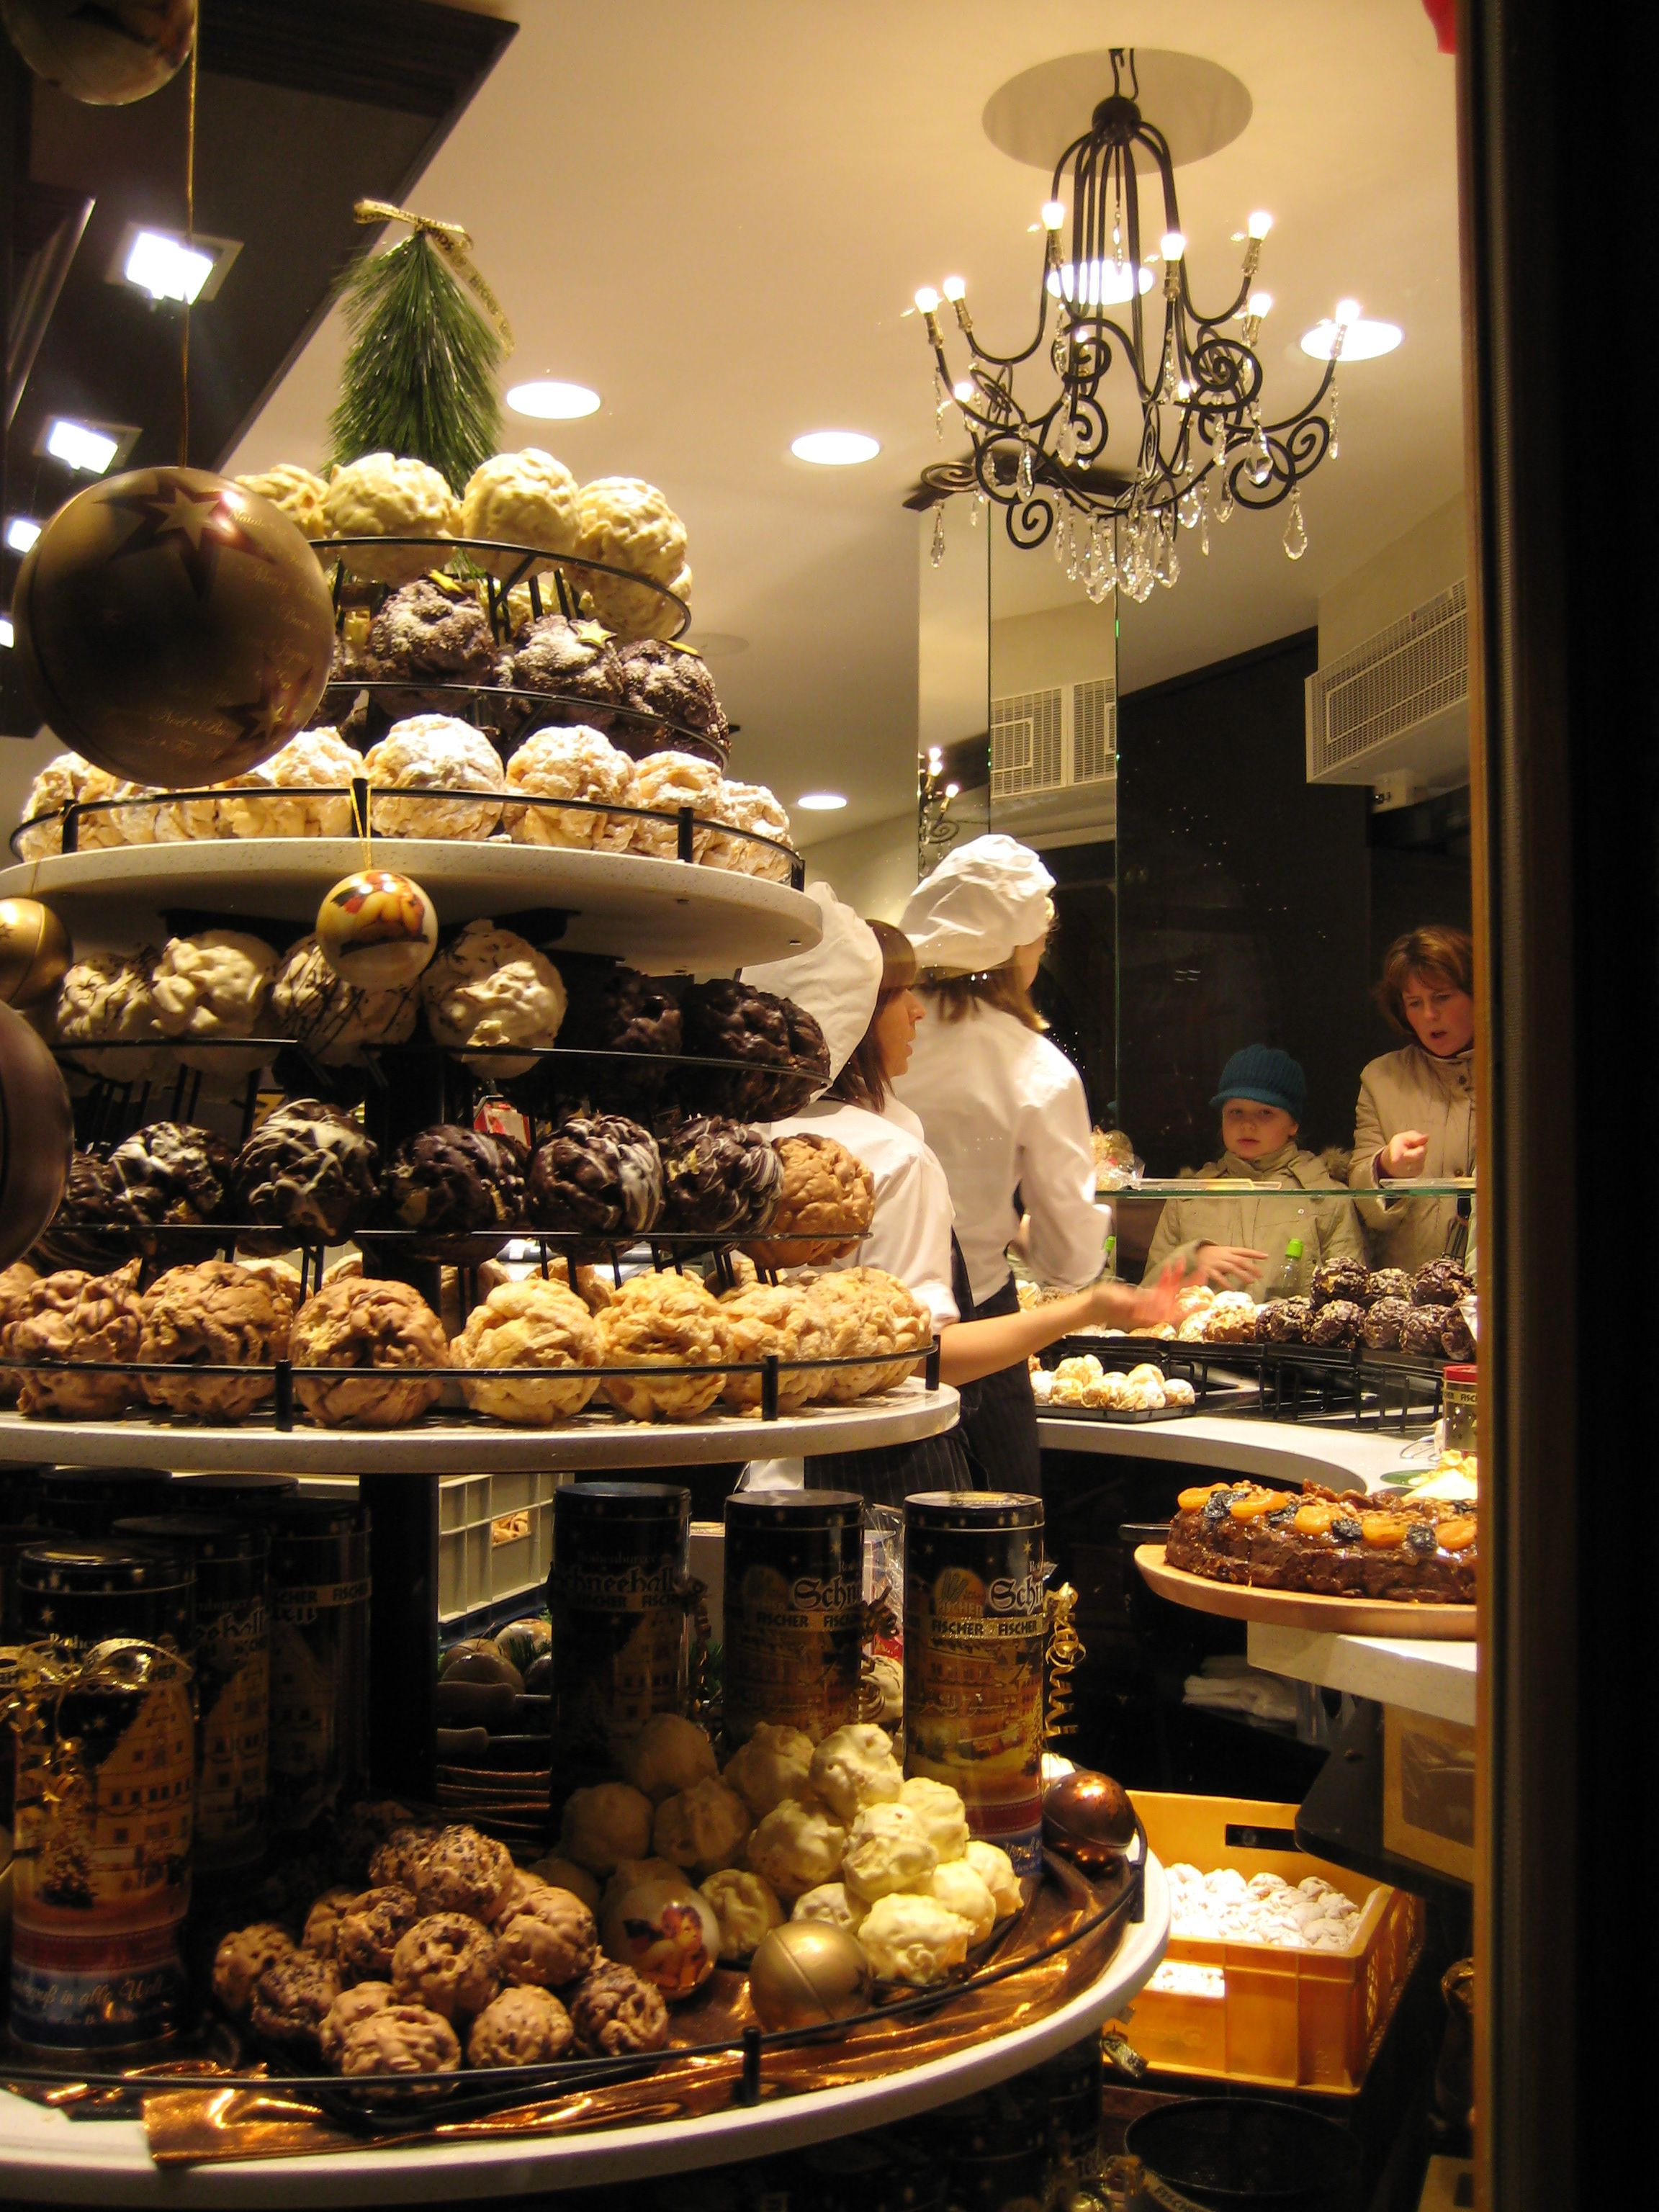 Schneekugeln... Weihnachtsbäckerei in Rothenburg | Food - | Pinterest